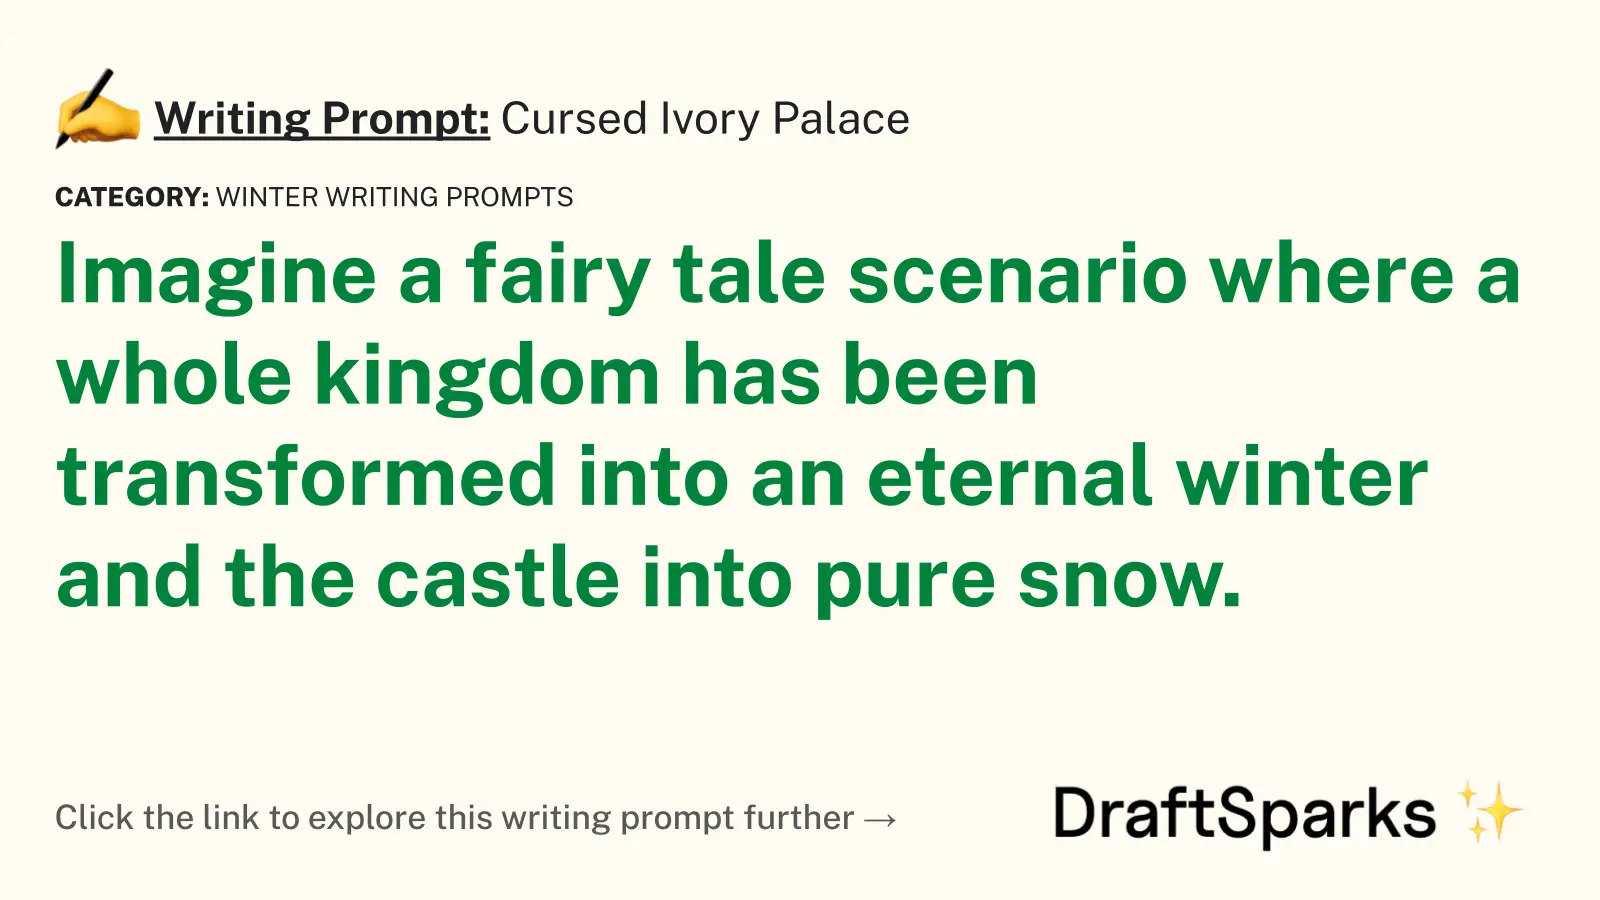 Cursed Ivory Palace